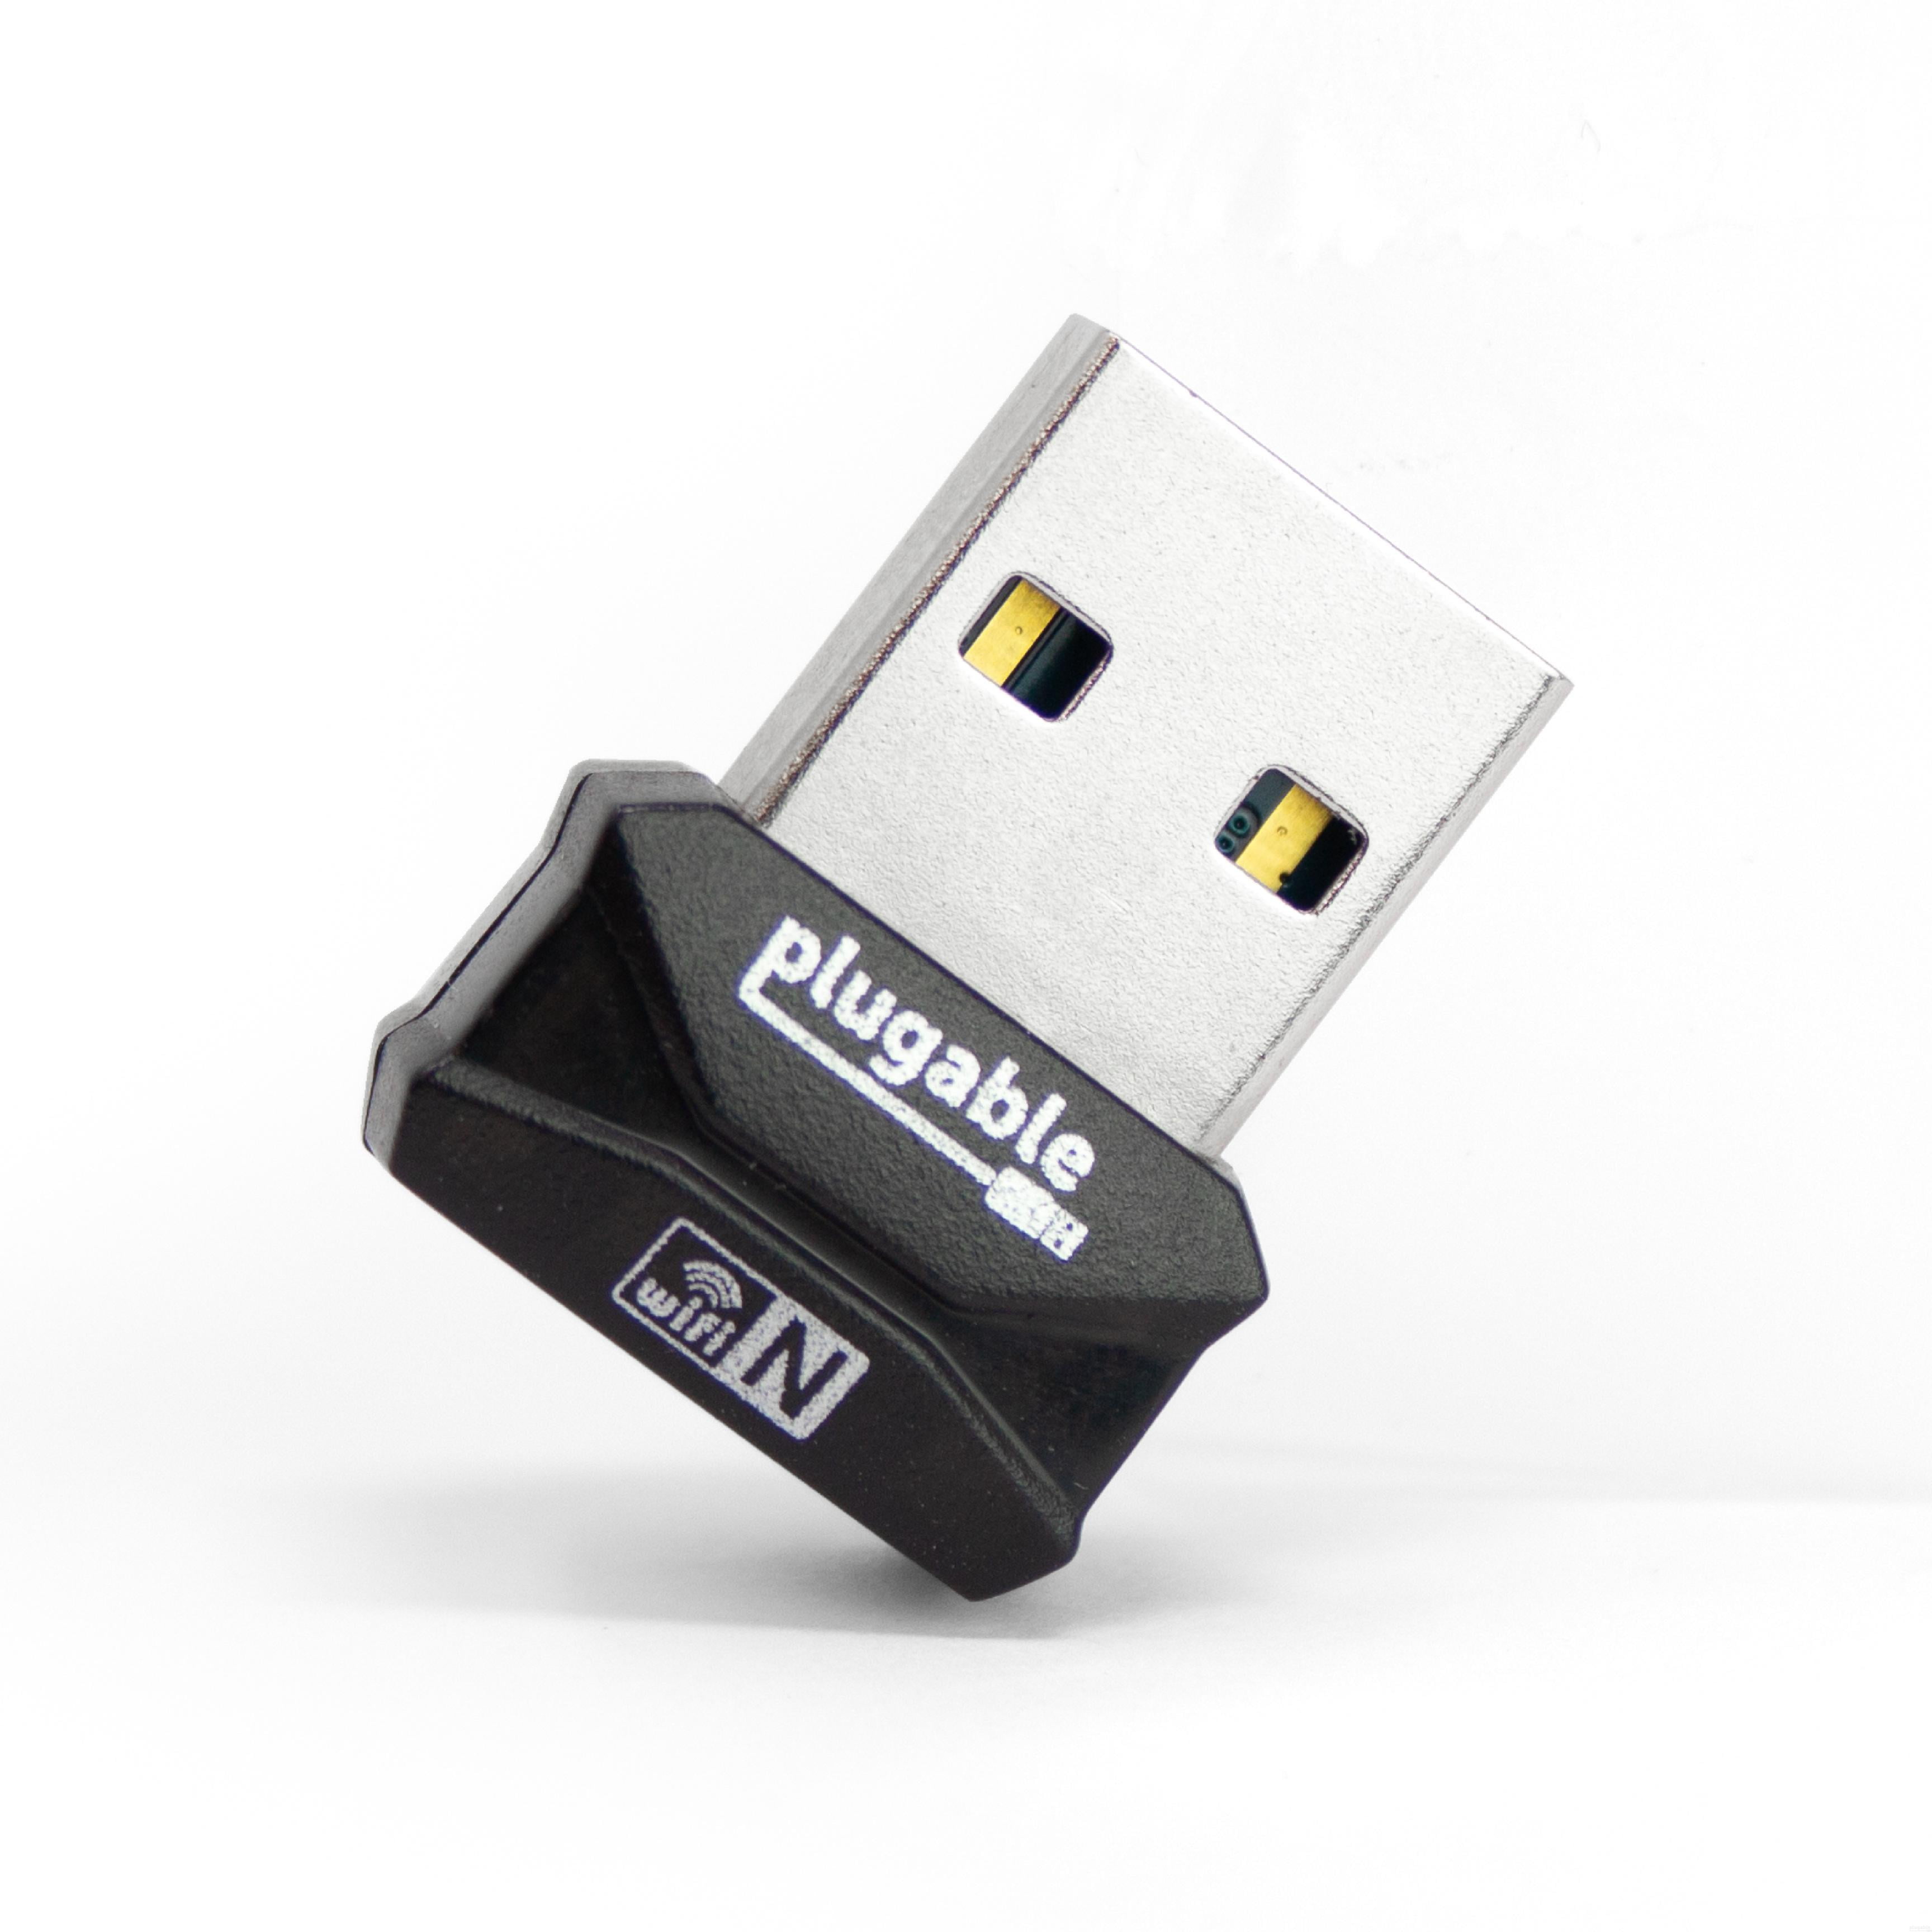 Fahrenheit mudder Hilsen Plugable USB 2.0 Wireless N 802.11n 150 Mbps Nano WiFi Network Adapter  (Realtek RTL8188EUS Chipset) Driverless Plug and Play for Windows -  Walmart.com